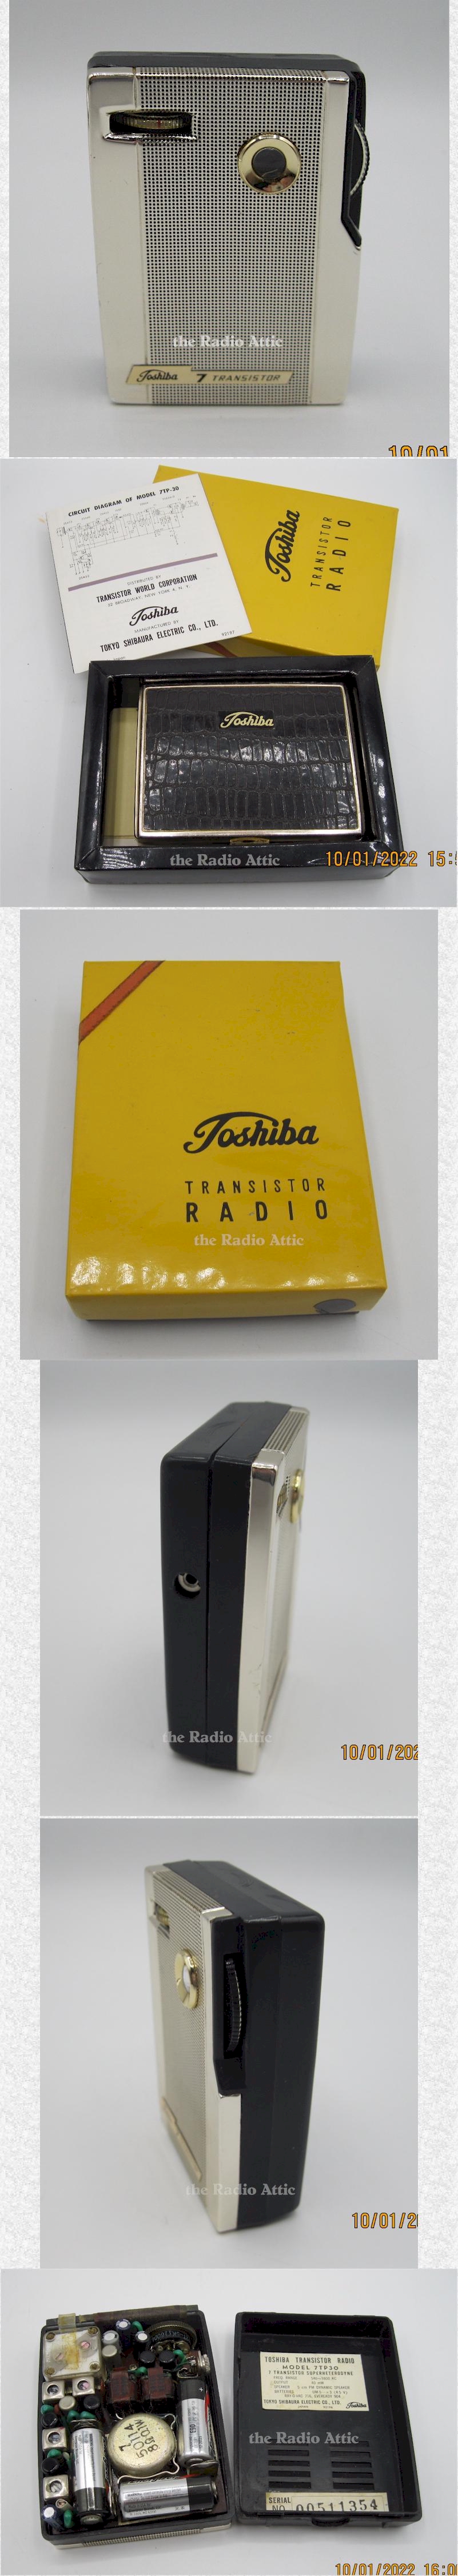 Toshiba 7TP-30 